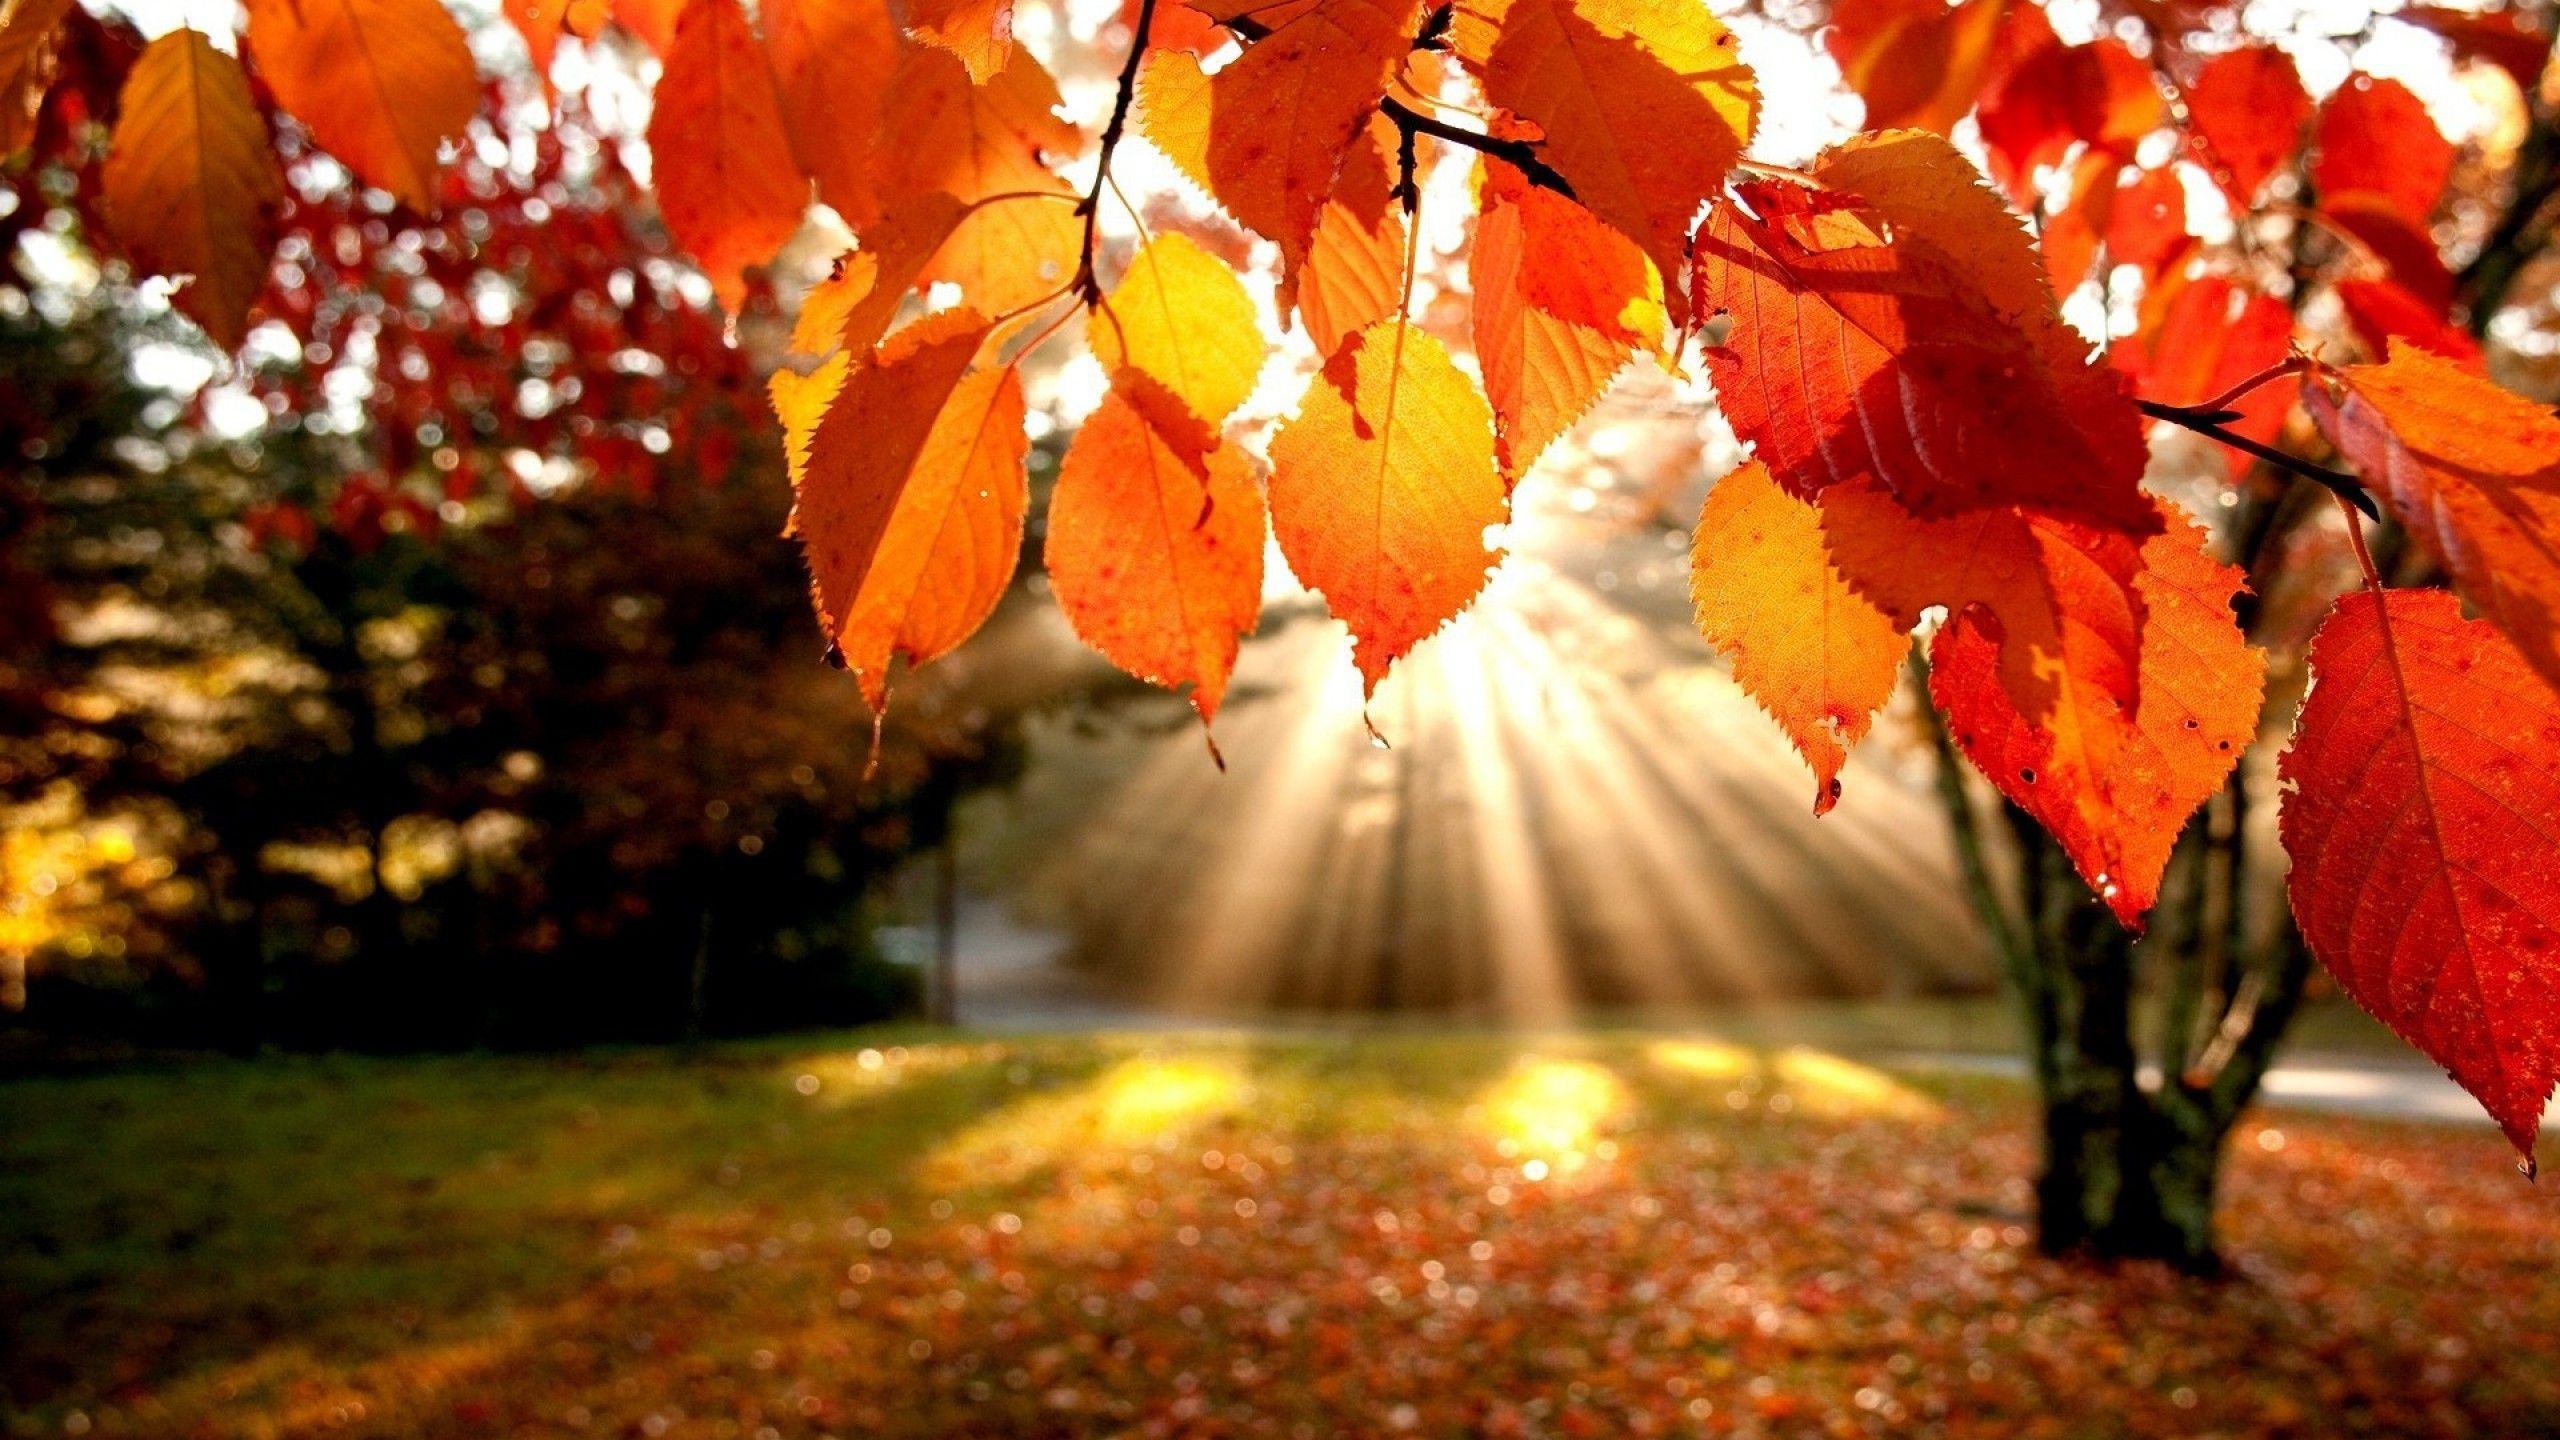 Autumnal Equinox Today!